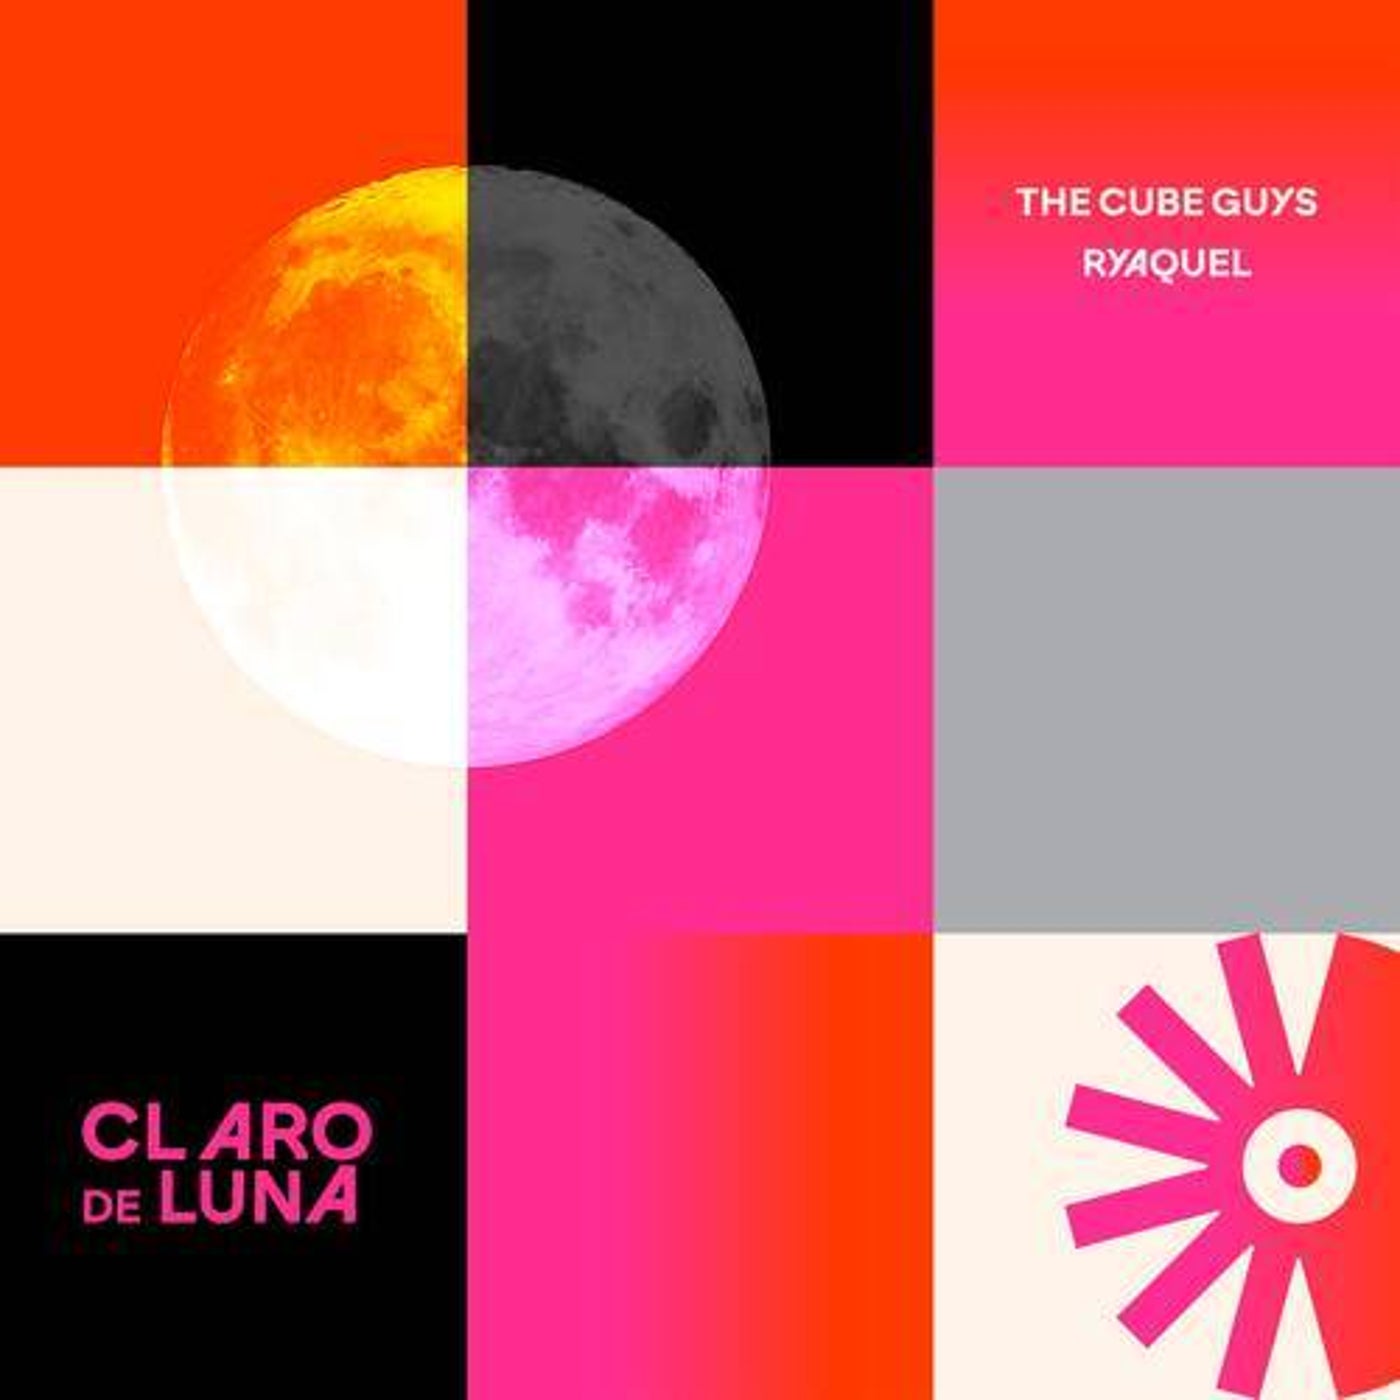 The Cube Guys, Ryaquel - Claro de Luna (Club Mix) on ORIANNA